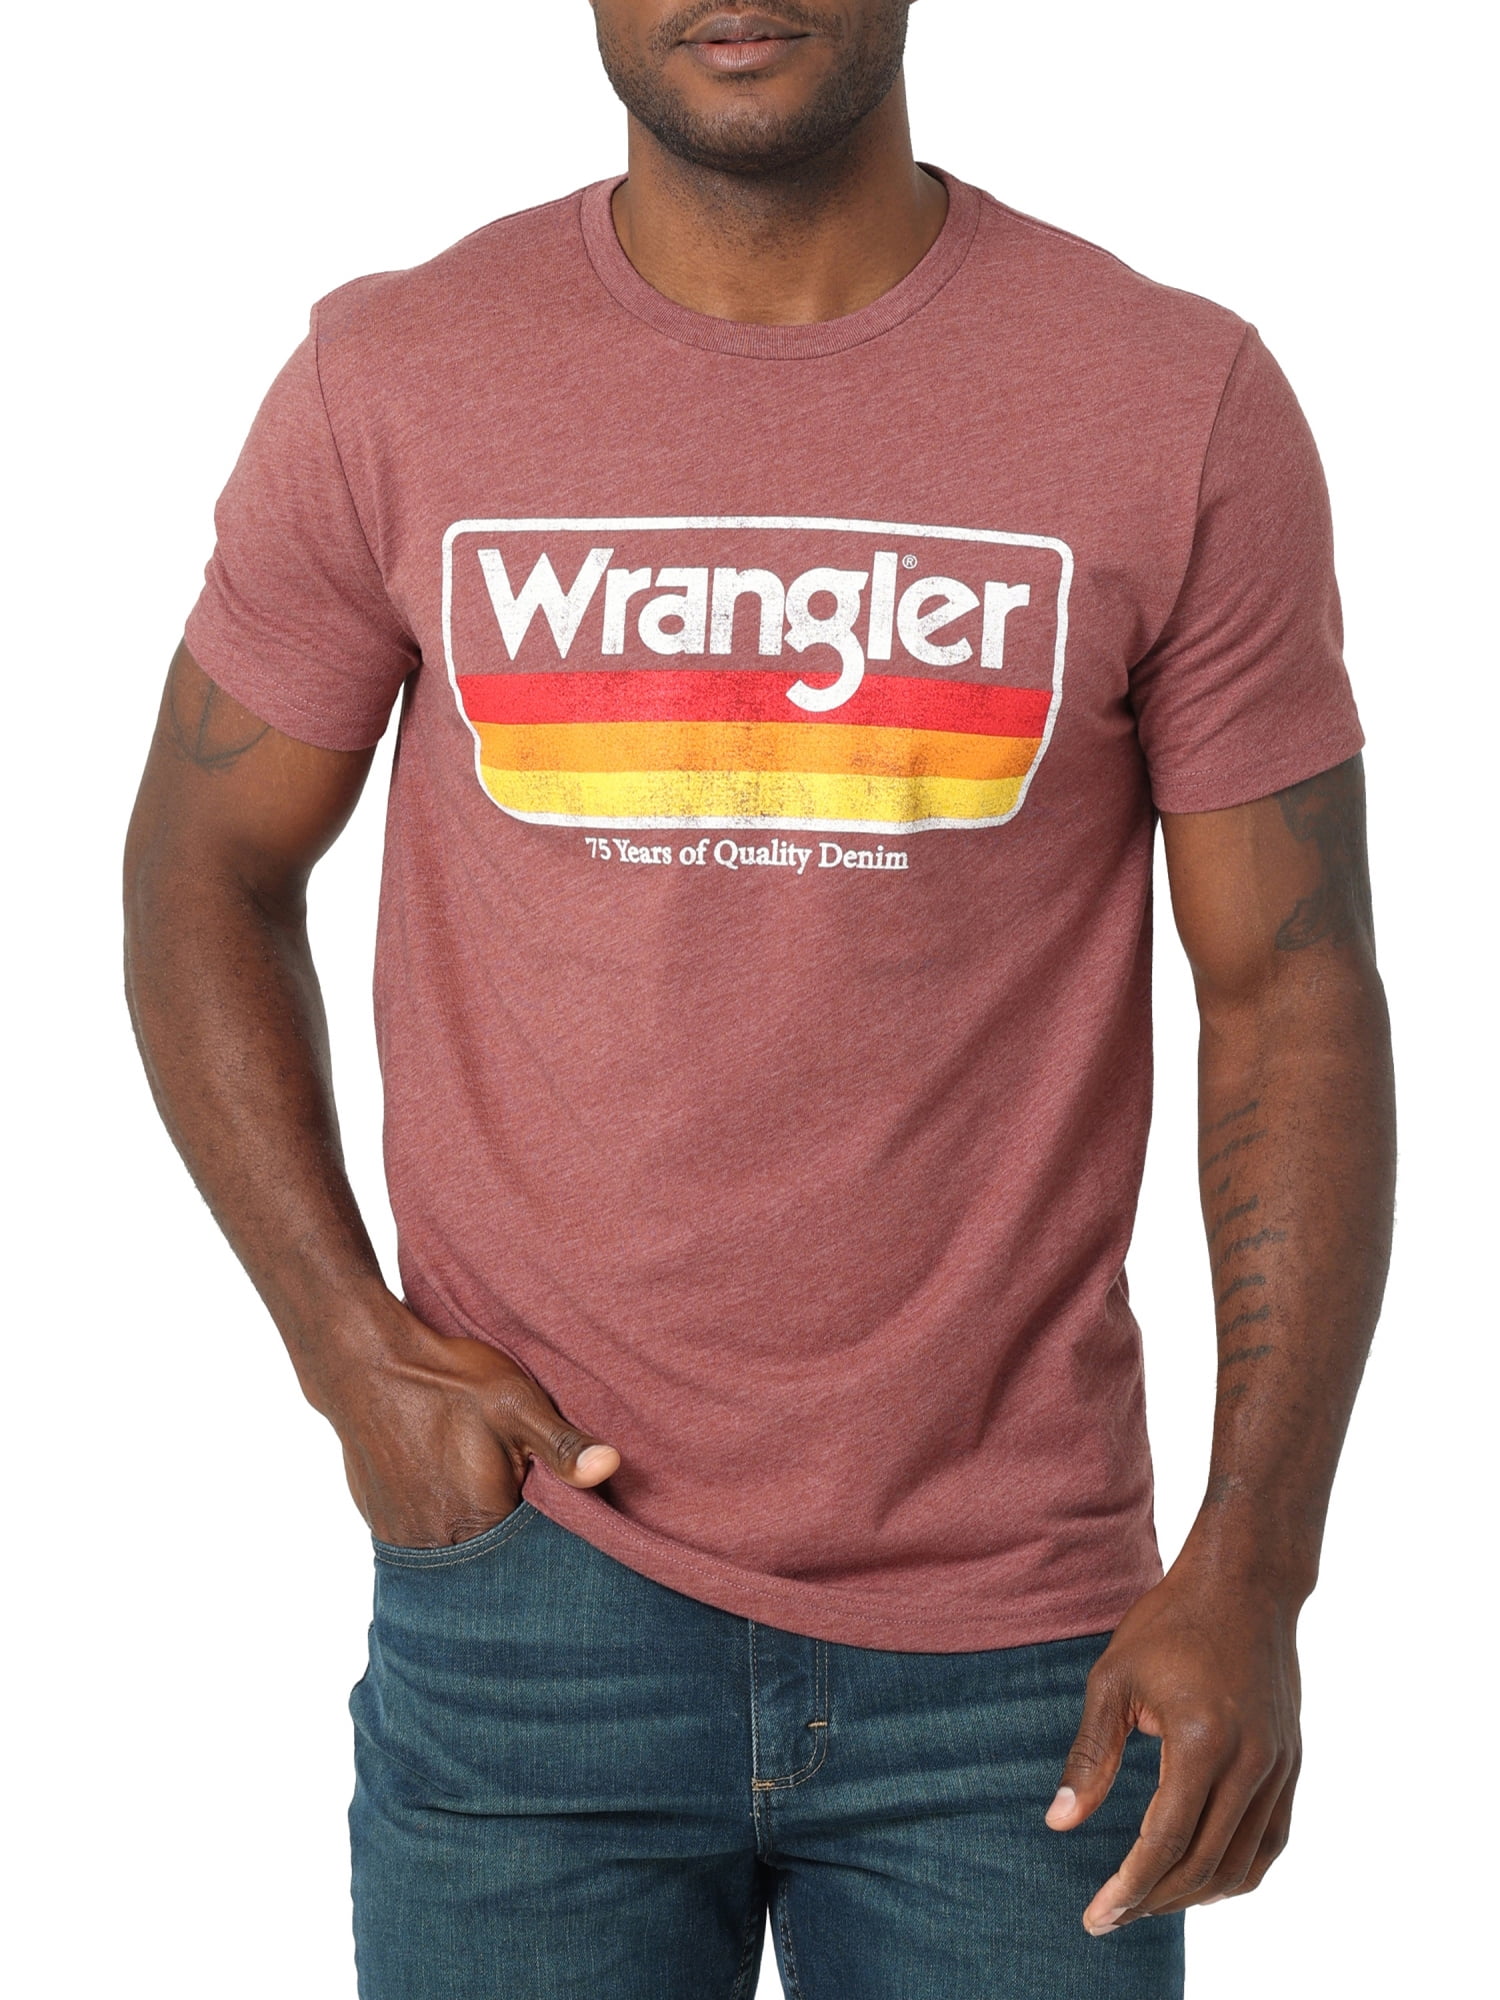 Wrangler Men's Short Sleeve 75th Anniversary Knit Tee, Sizes S-3XL - Walmart .com